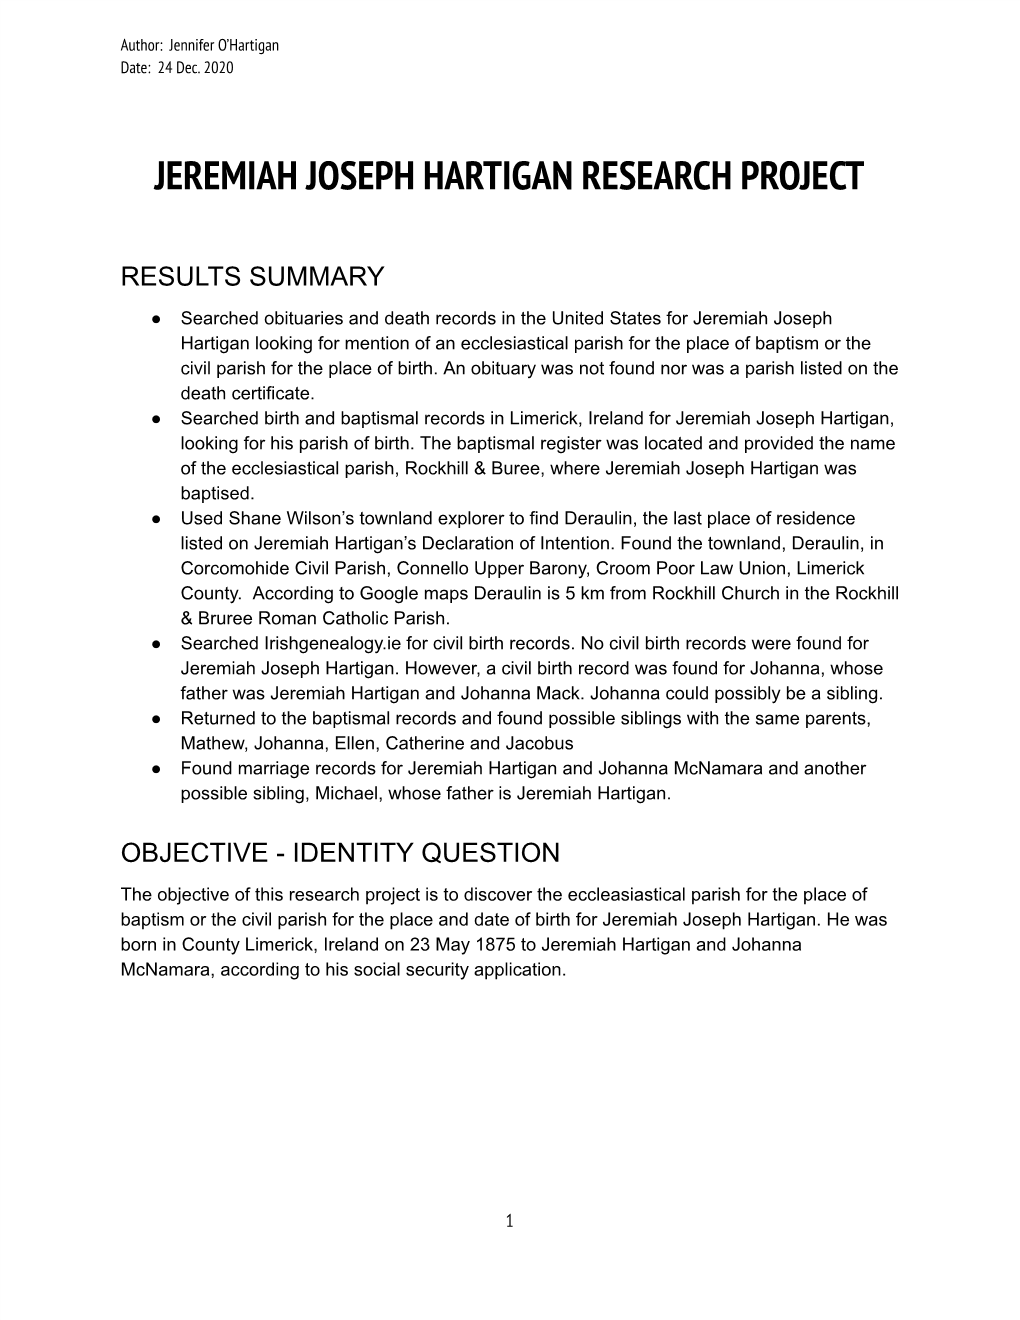 Jeremiah Joseph Hartigan Research Project